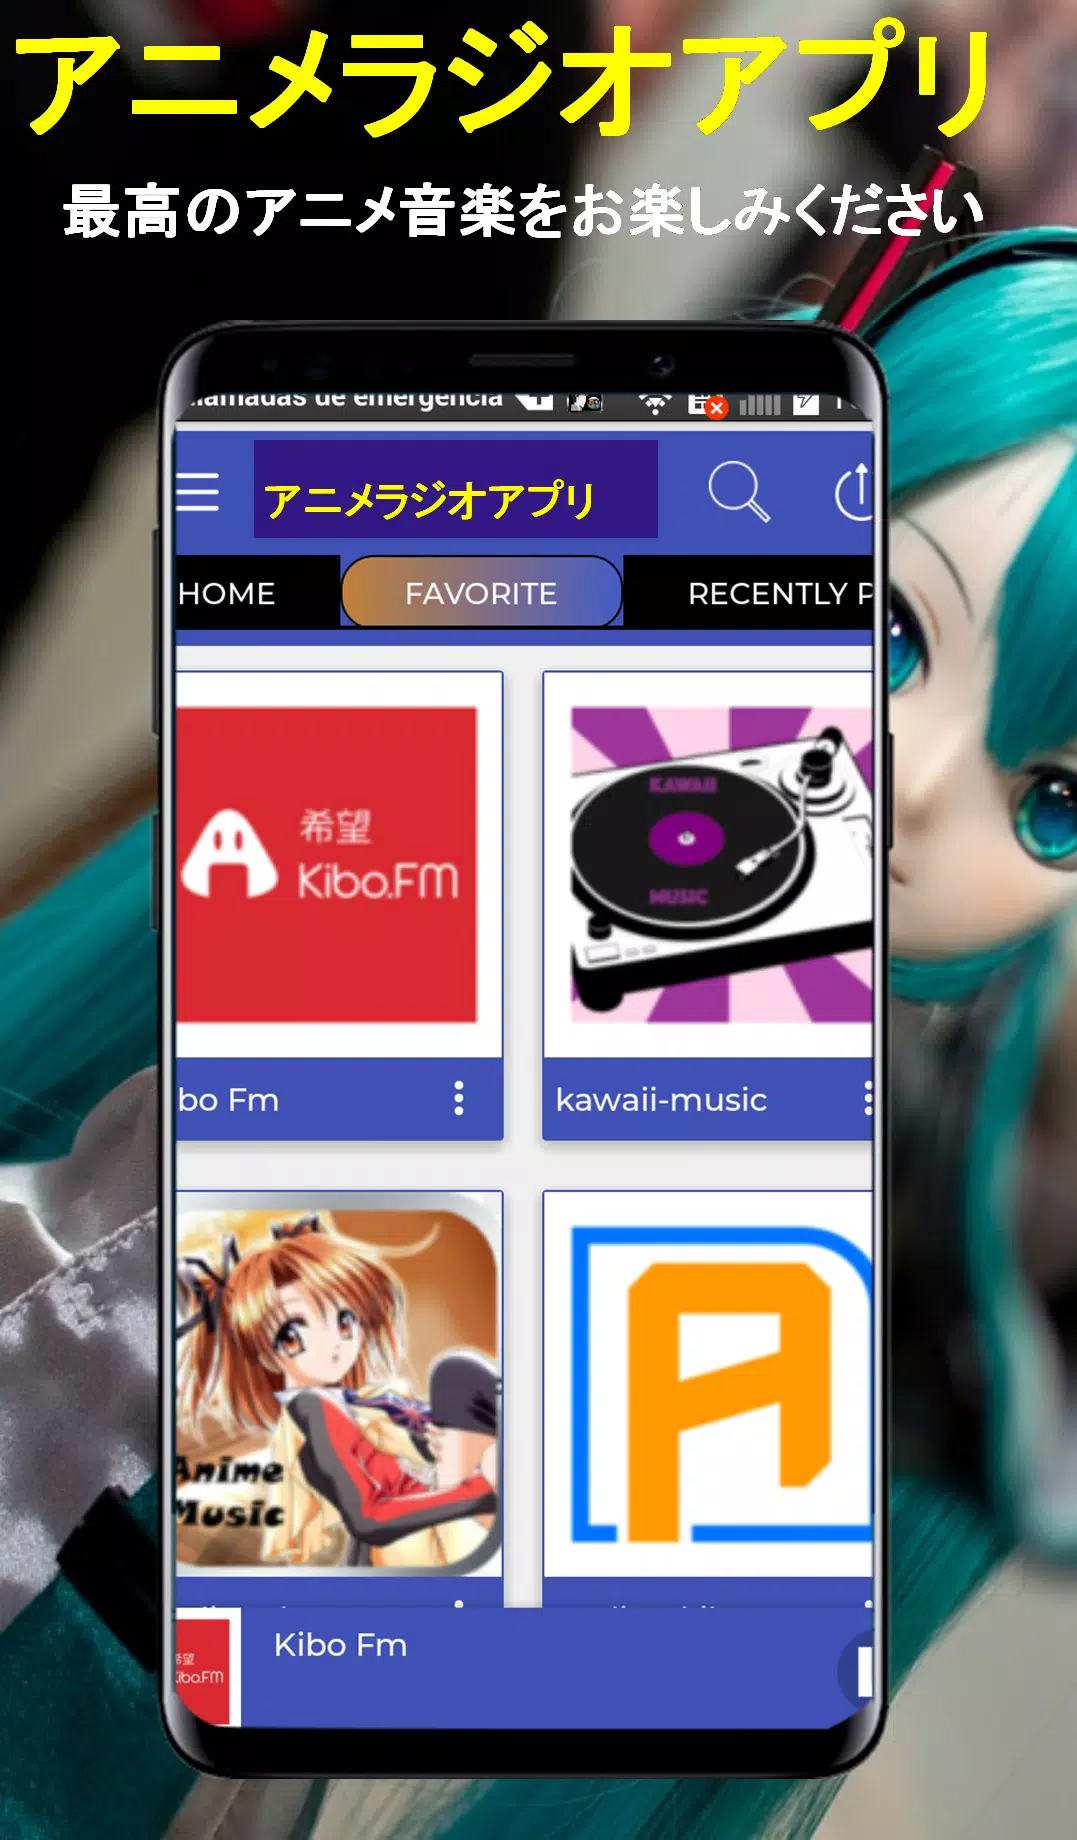 Anime Radio App Manga Fm Live for Android - APK Download